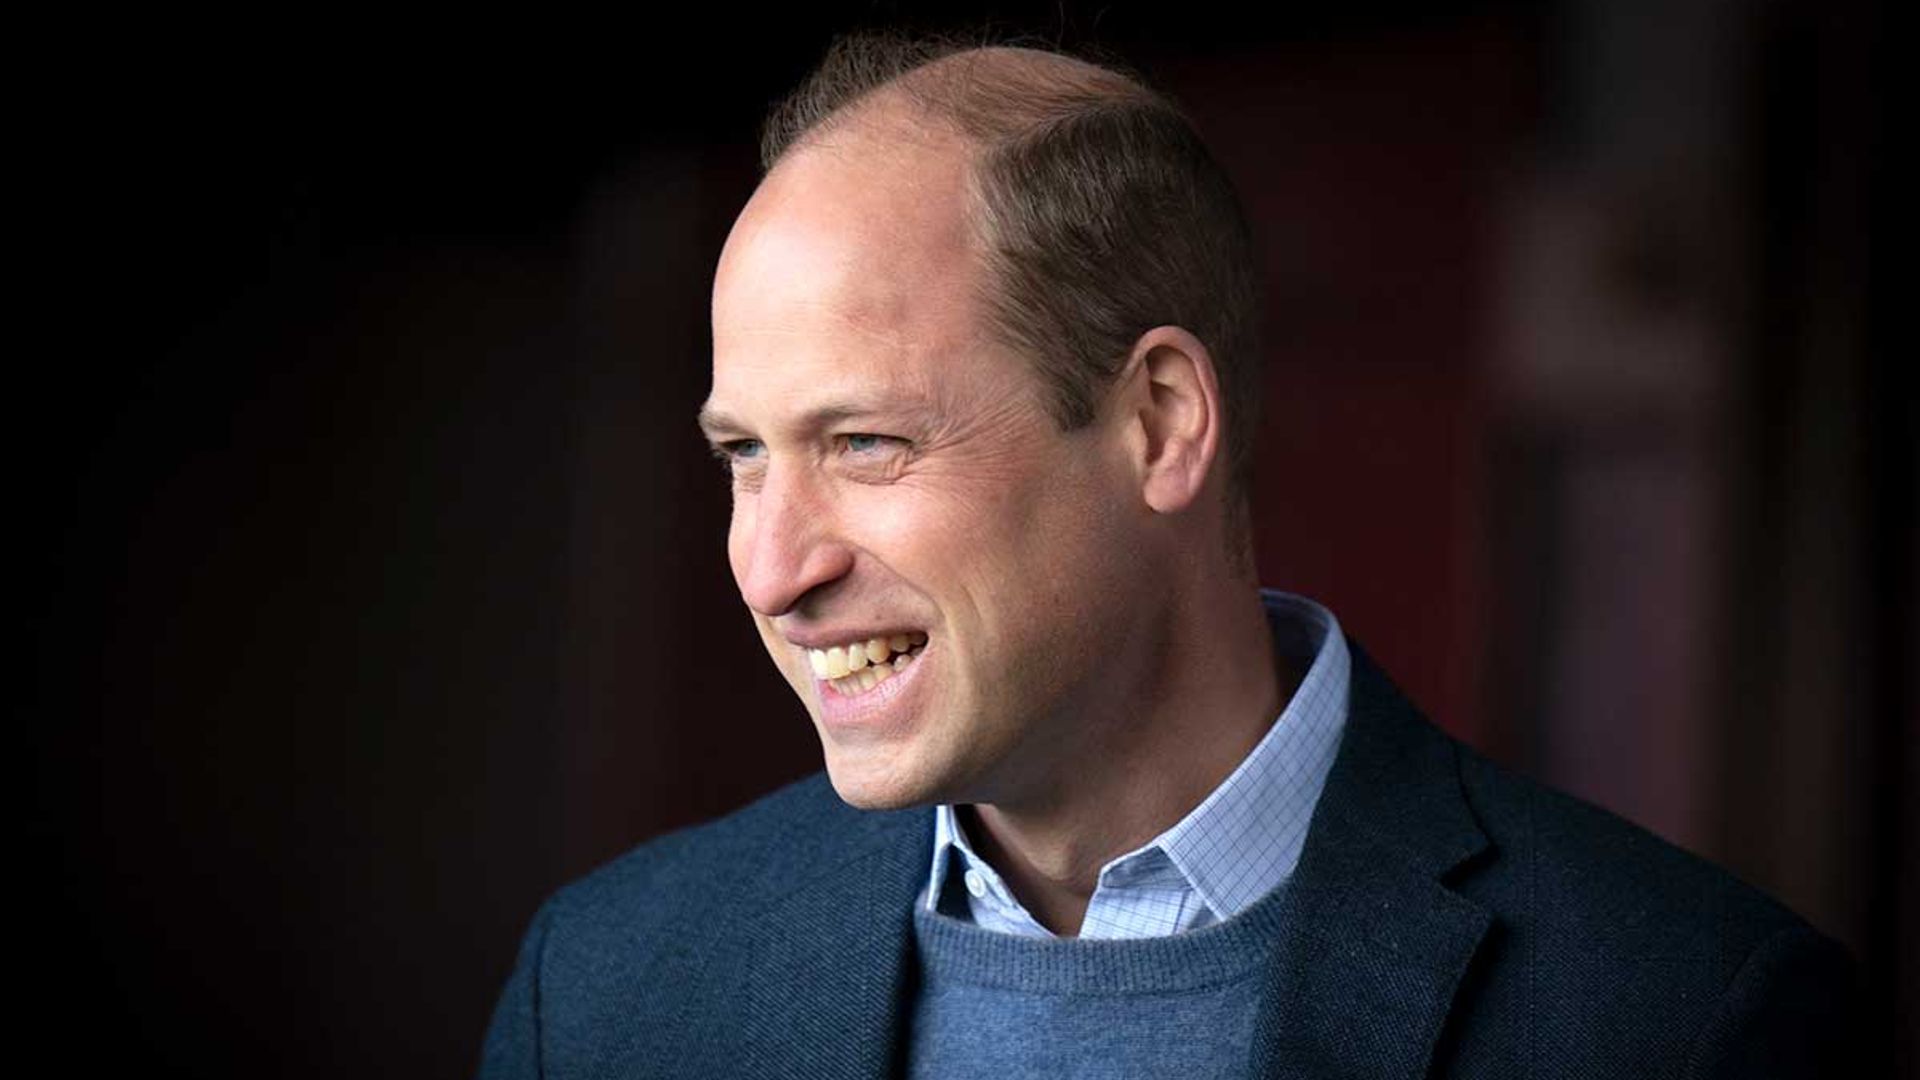 Prince William sends rare personal tweet to mark milestone moment